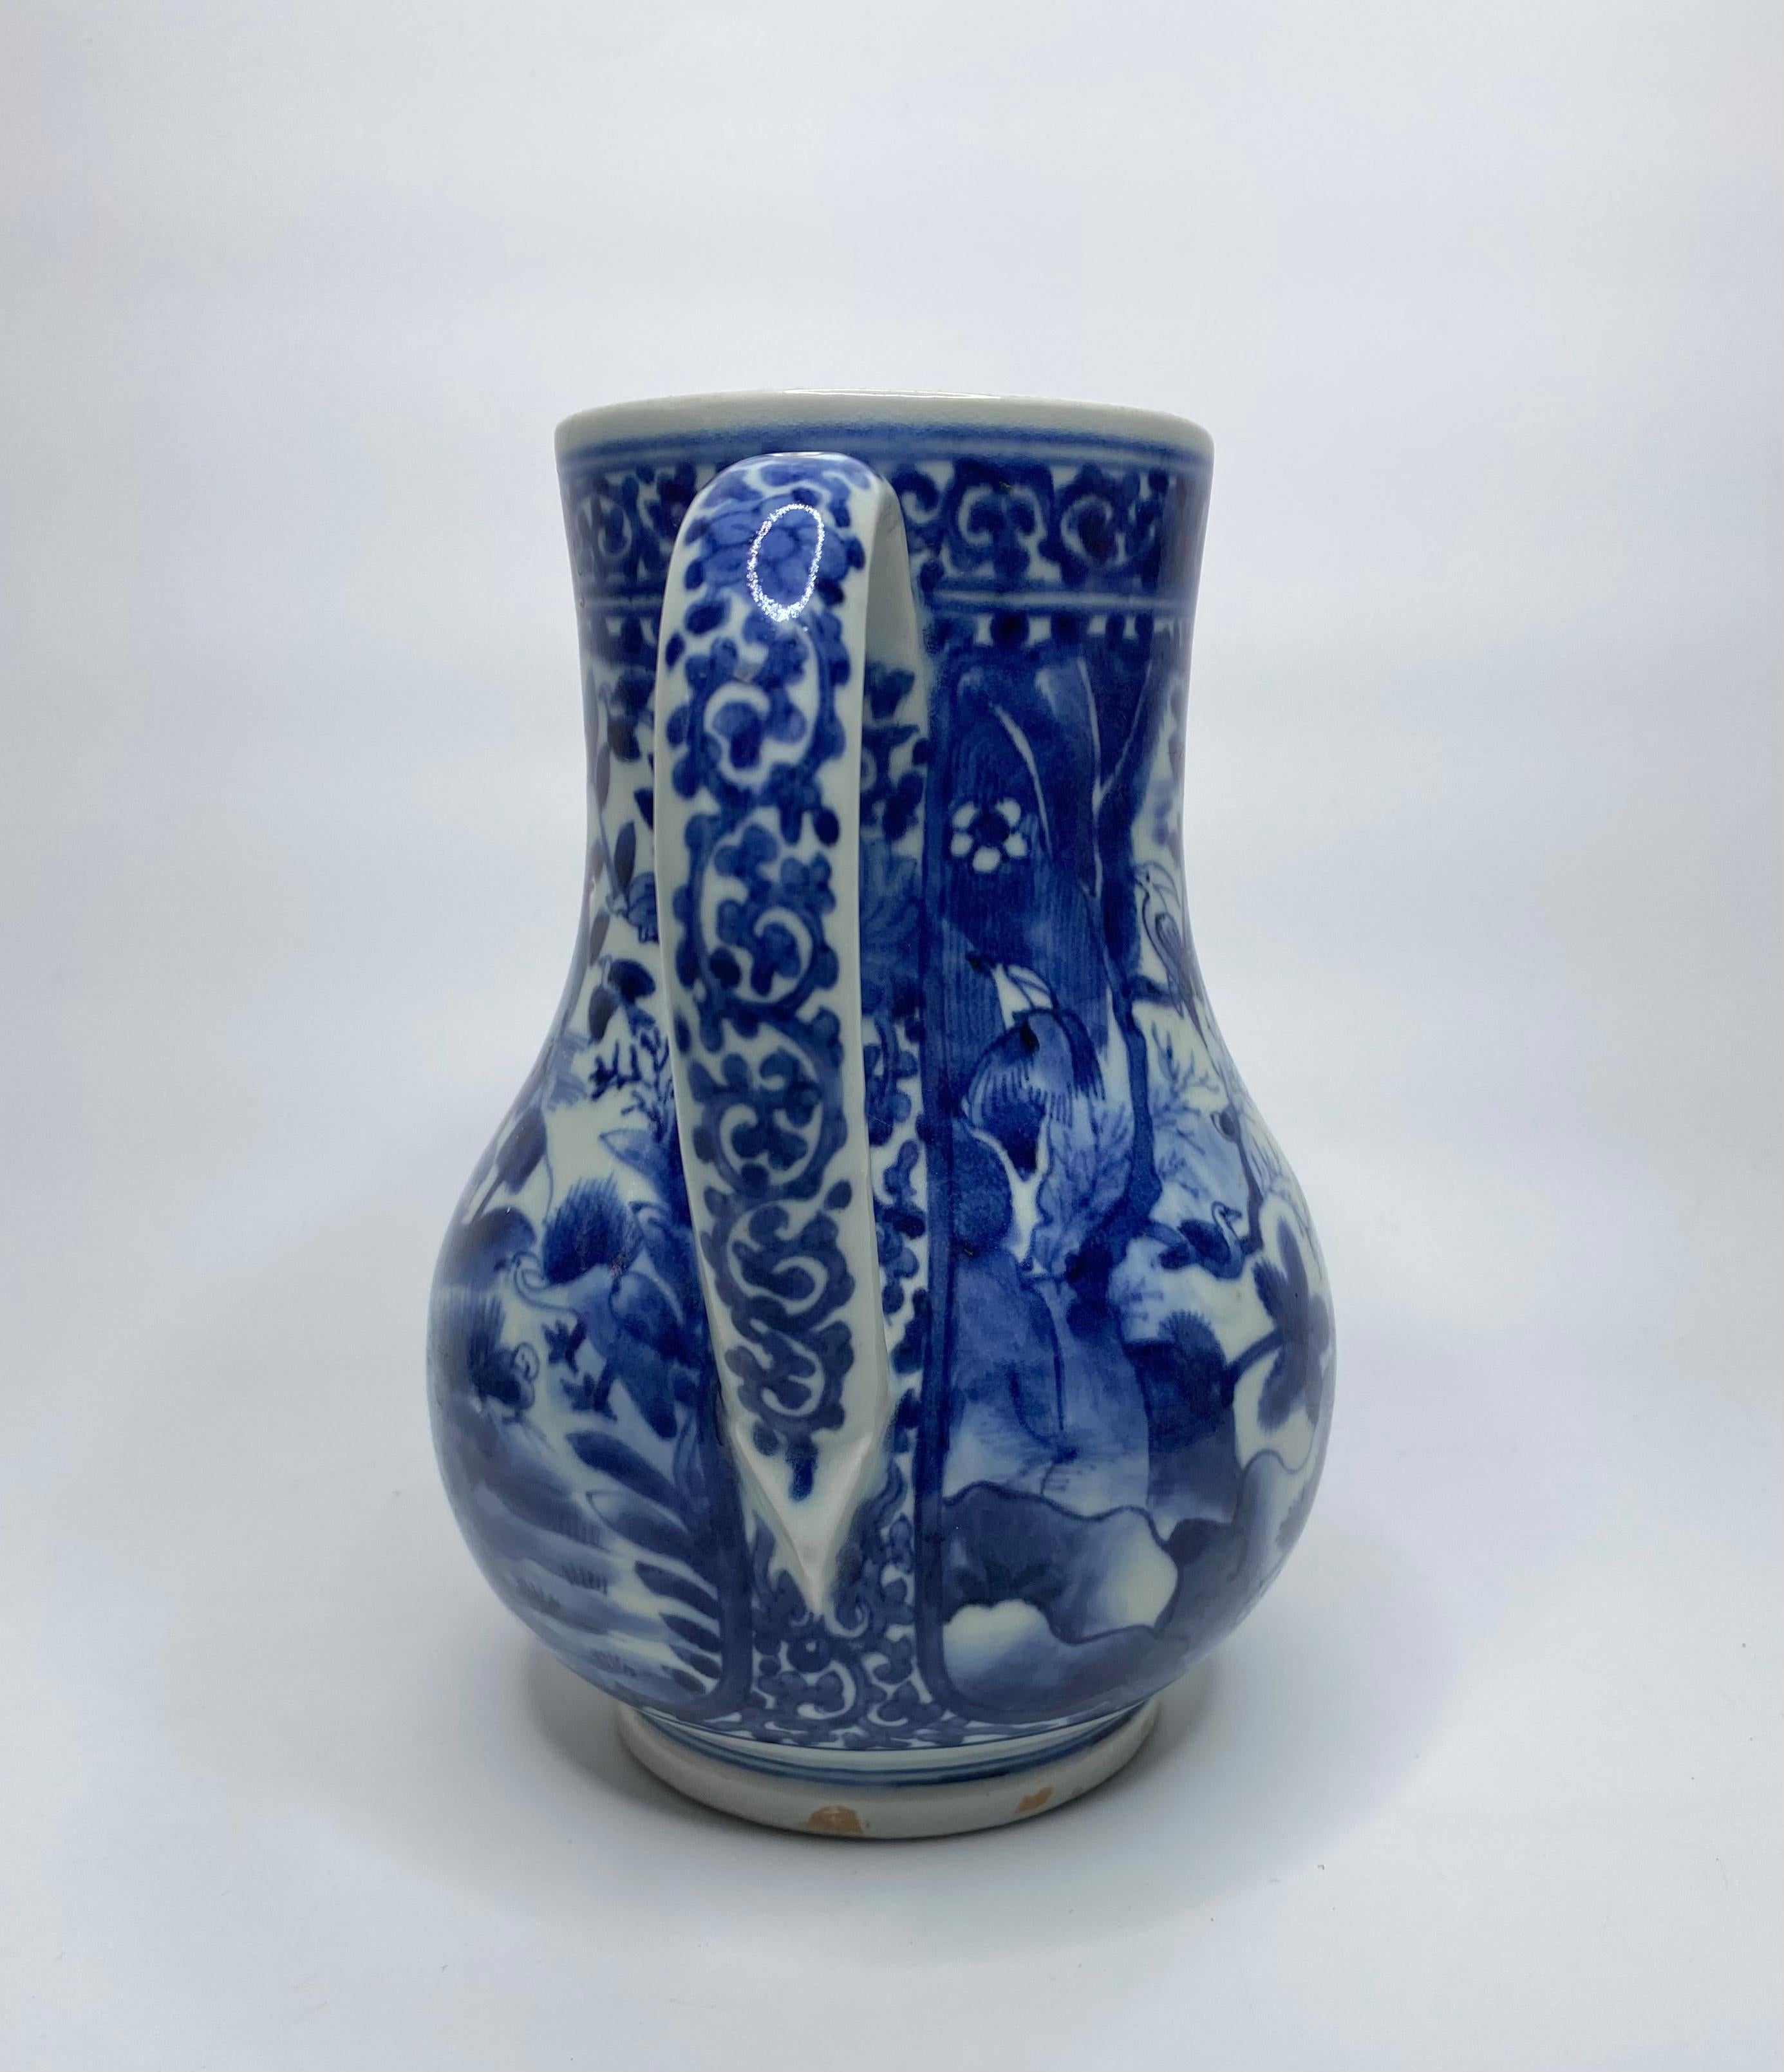 Fired Arita Porcelain Tankard, Japan, c. 1700, Genroku Period